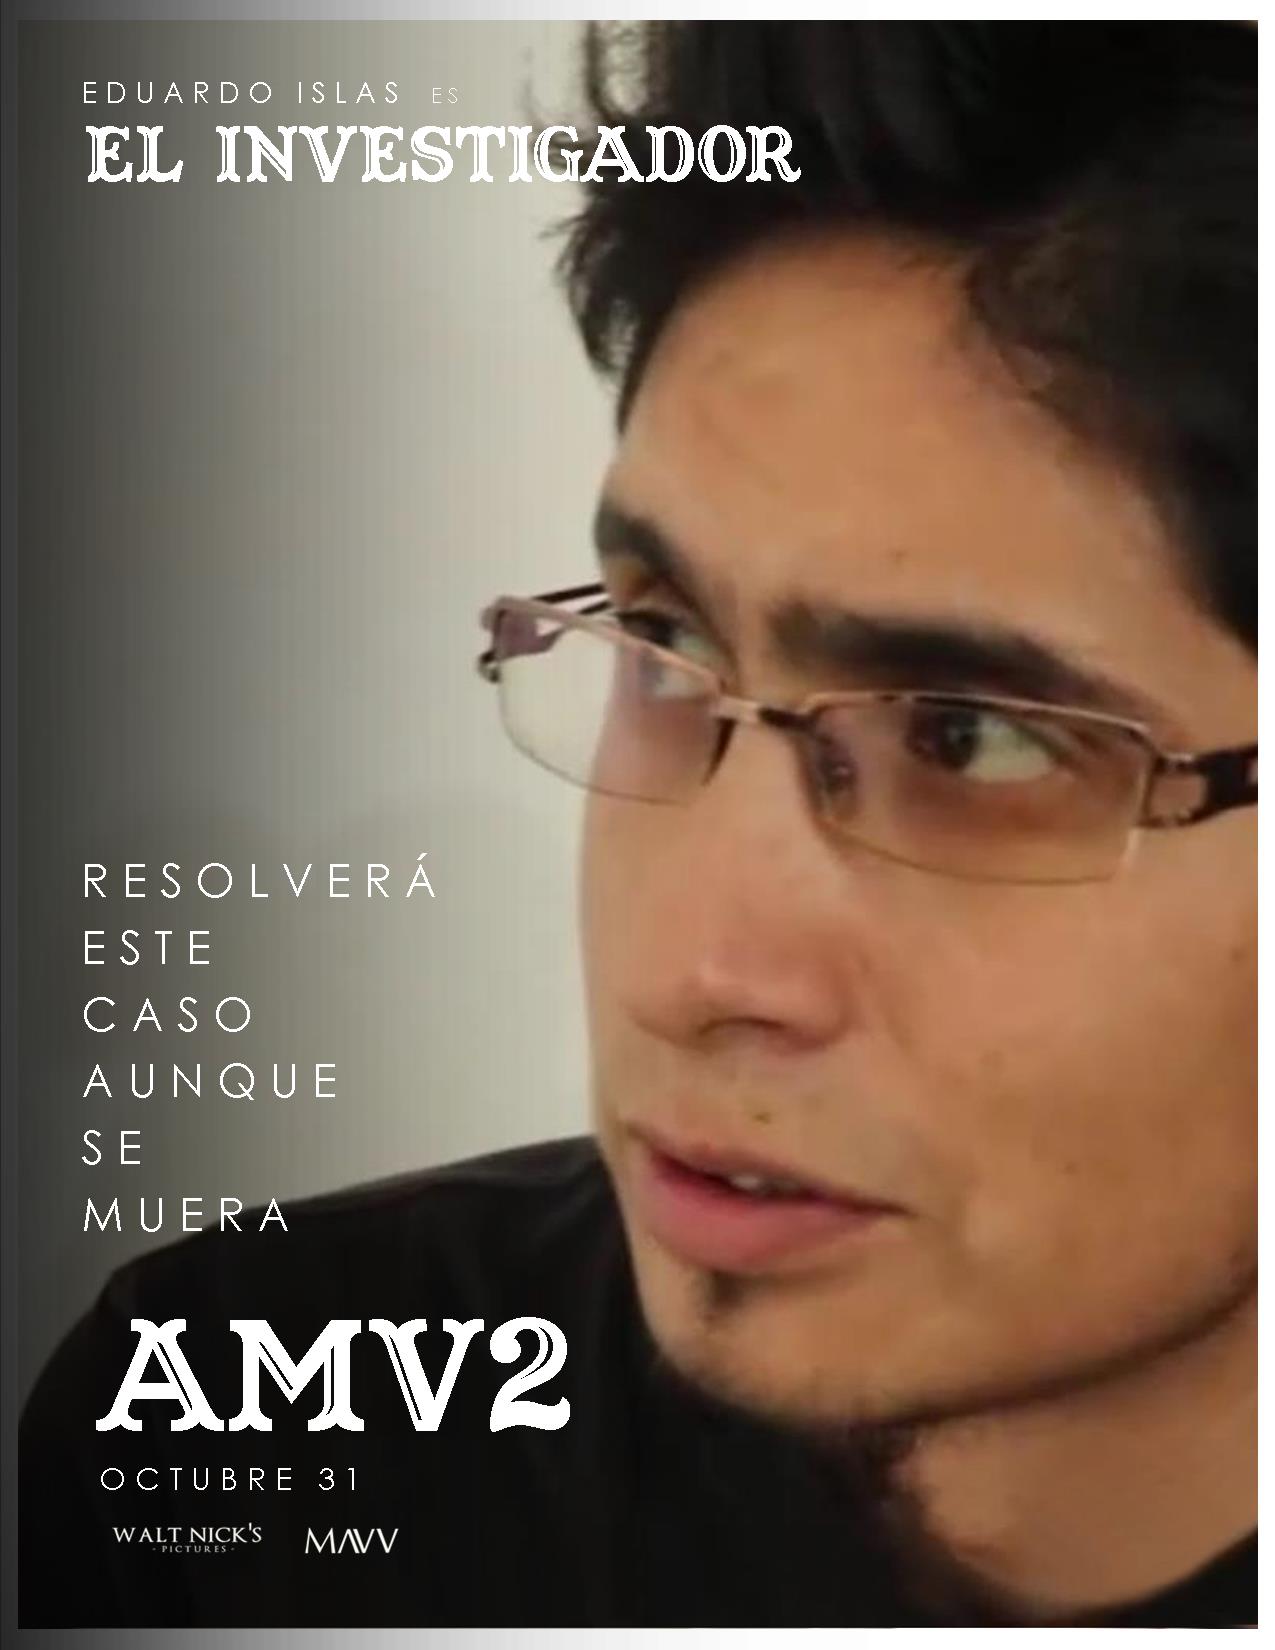 Póster #AMV2 - El Investigador (Octubre 22)